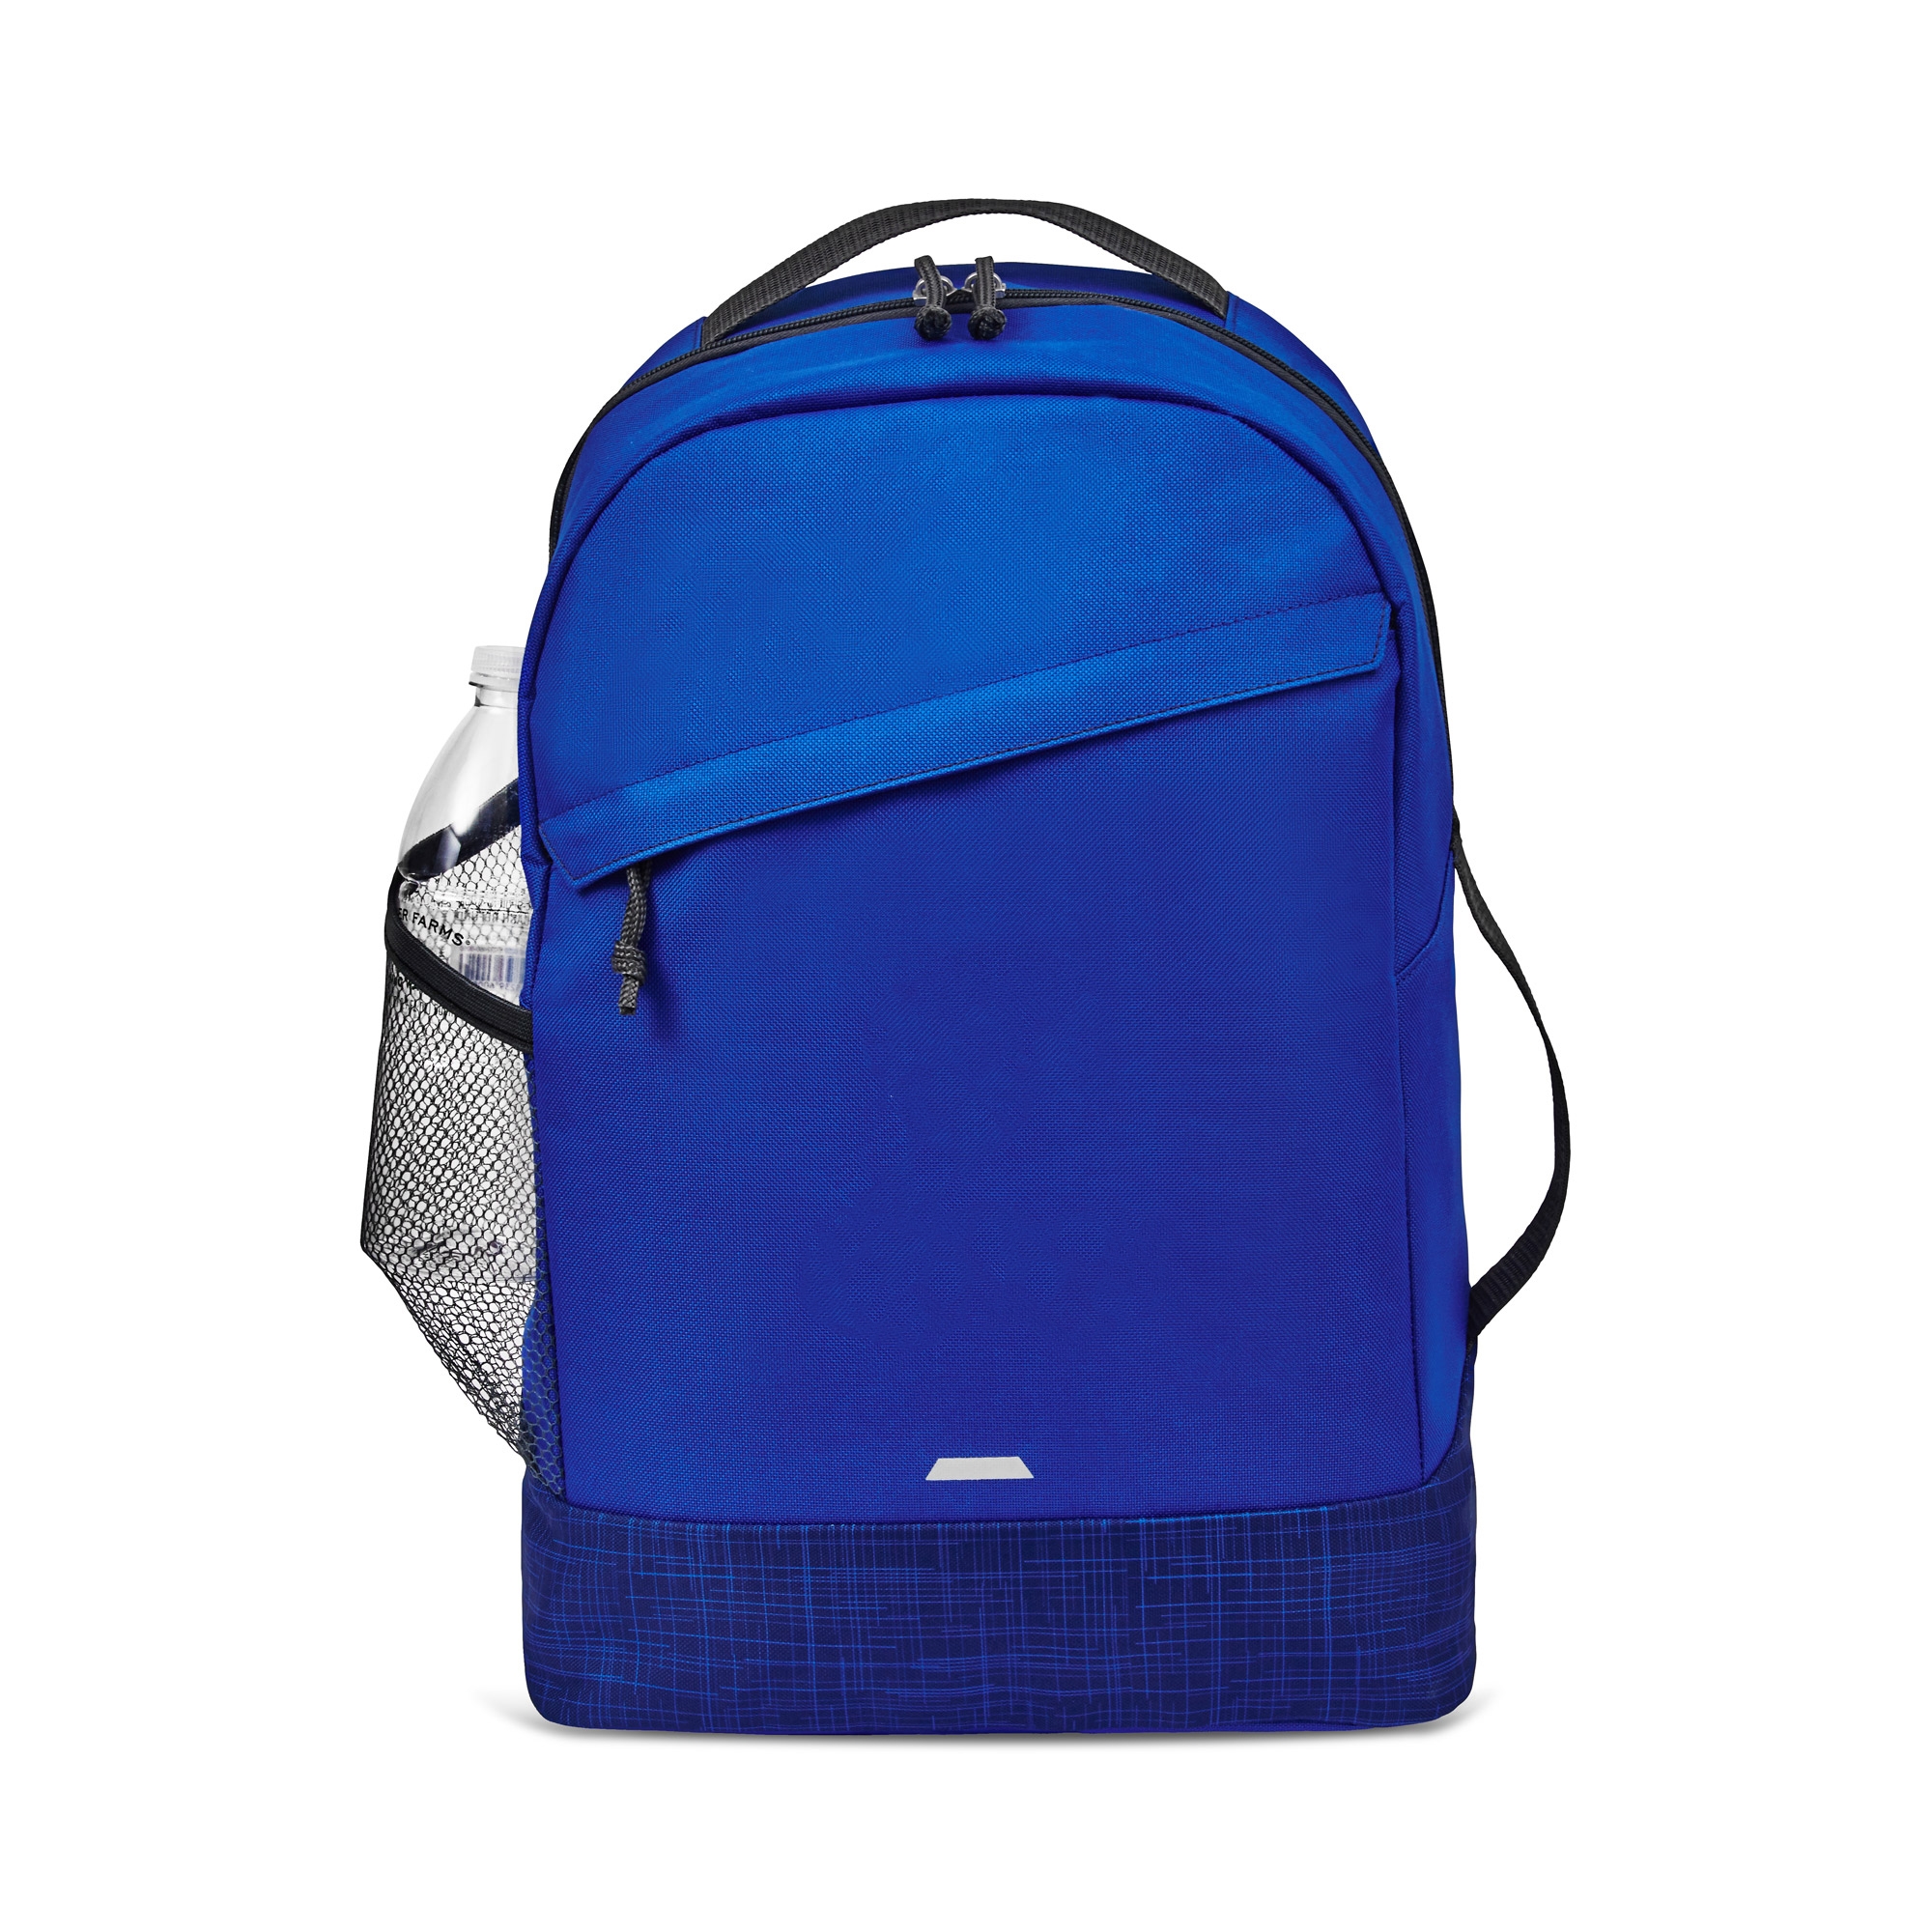 Gemline 5263 - Taurus Backpack